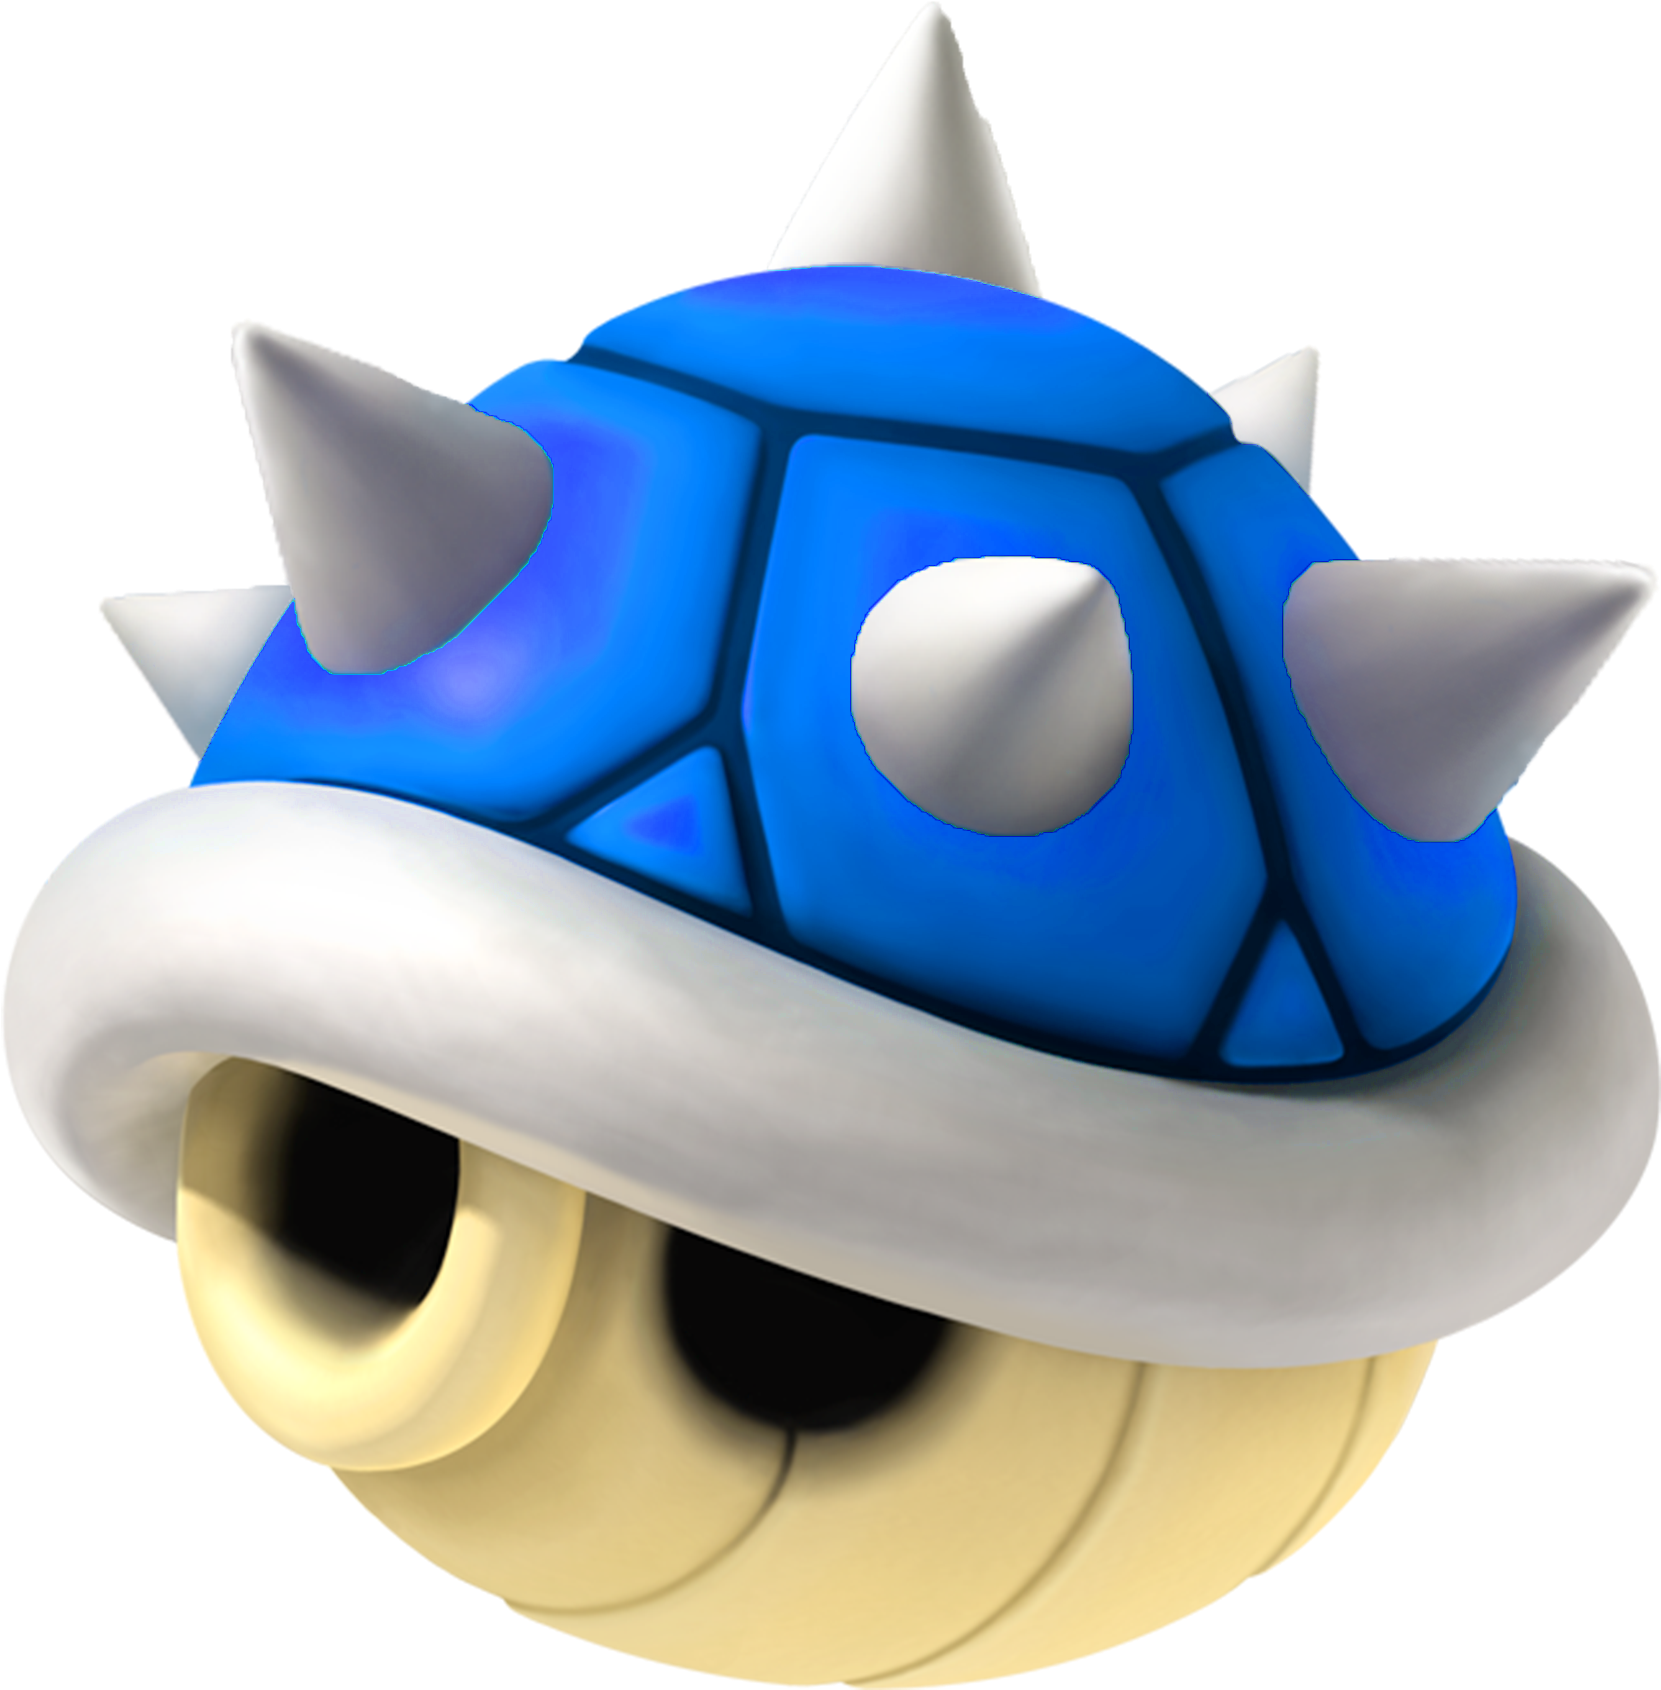 N64 Spiny Shell - Blue Shell Mario Kart 64 (1661x1690)